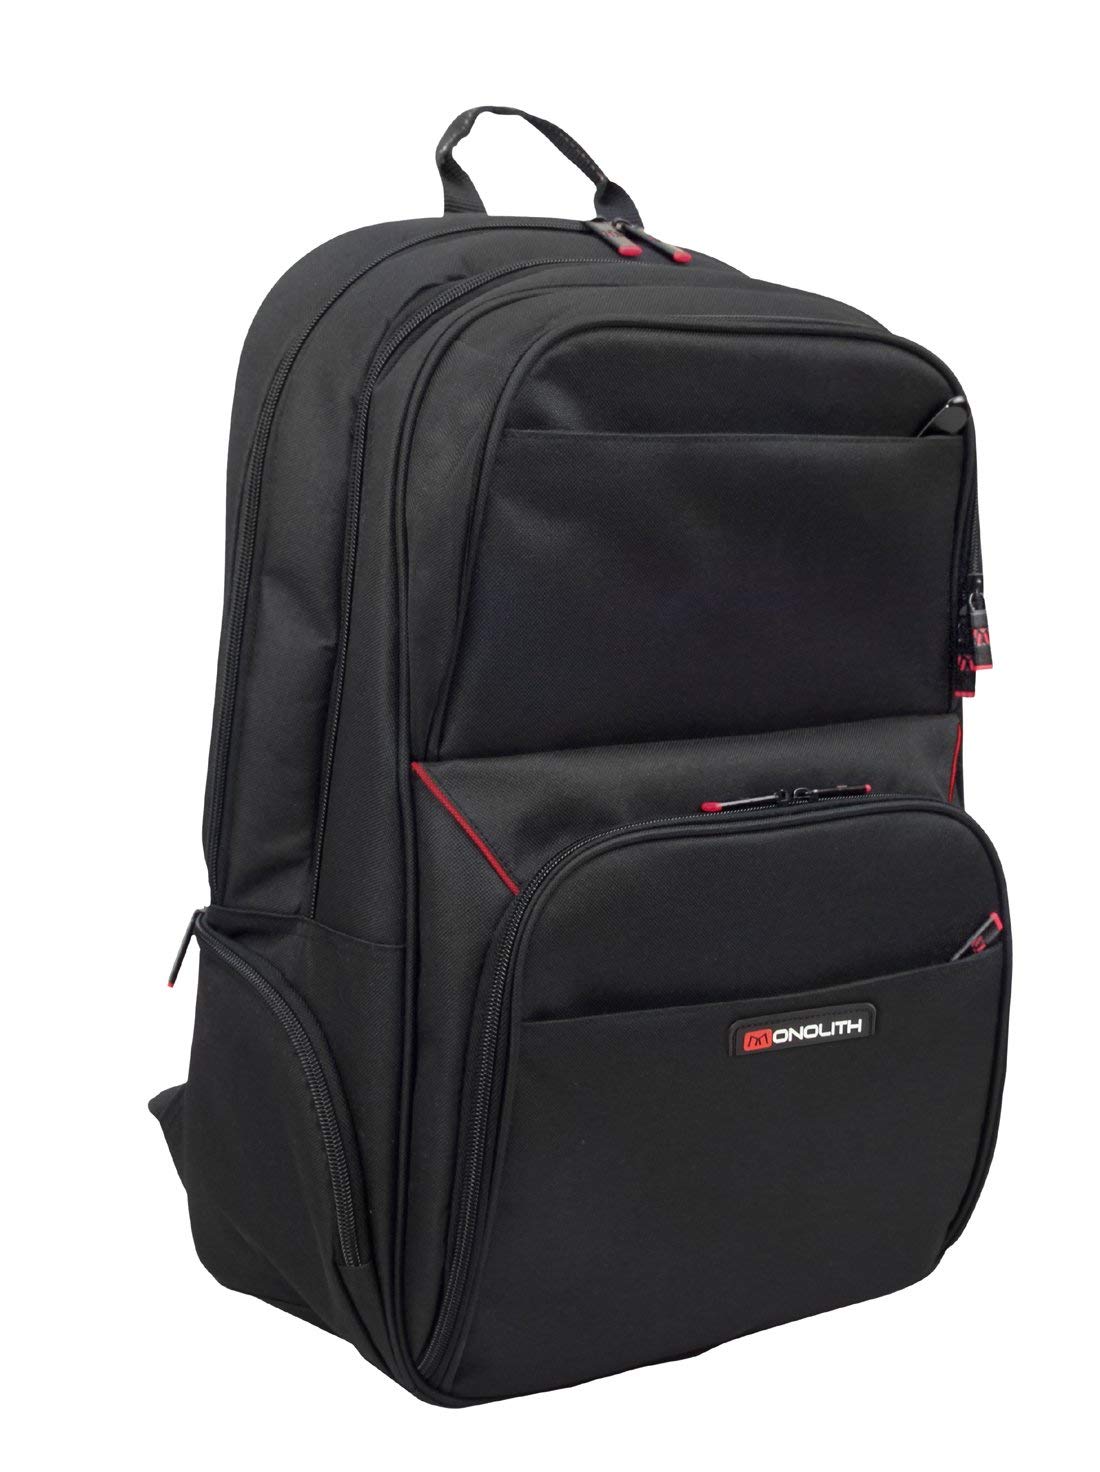 Motion II Lweight Laptop Backpack